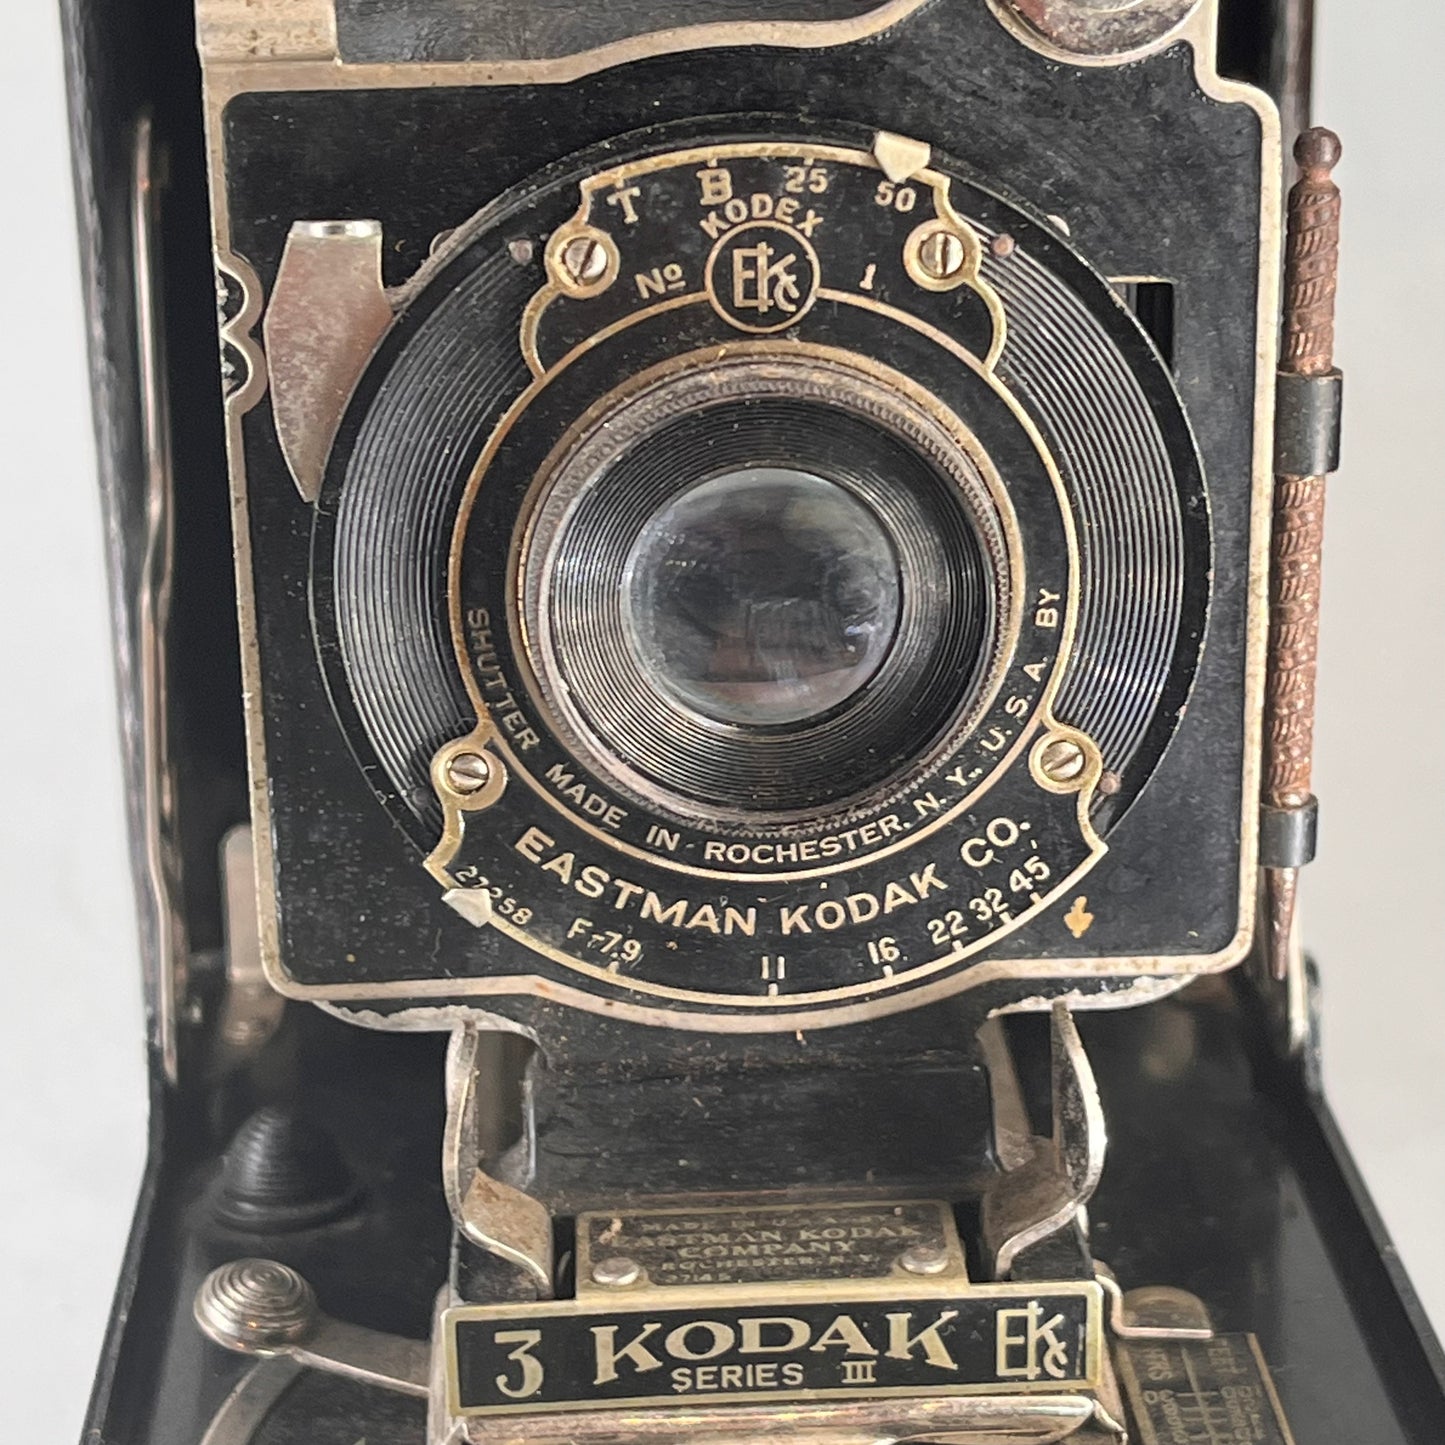 Kodak series iii